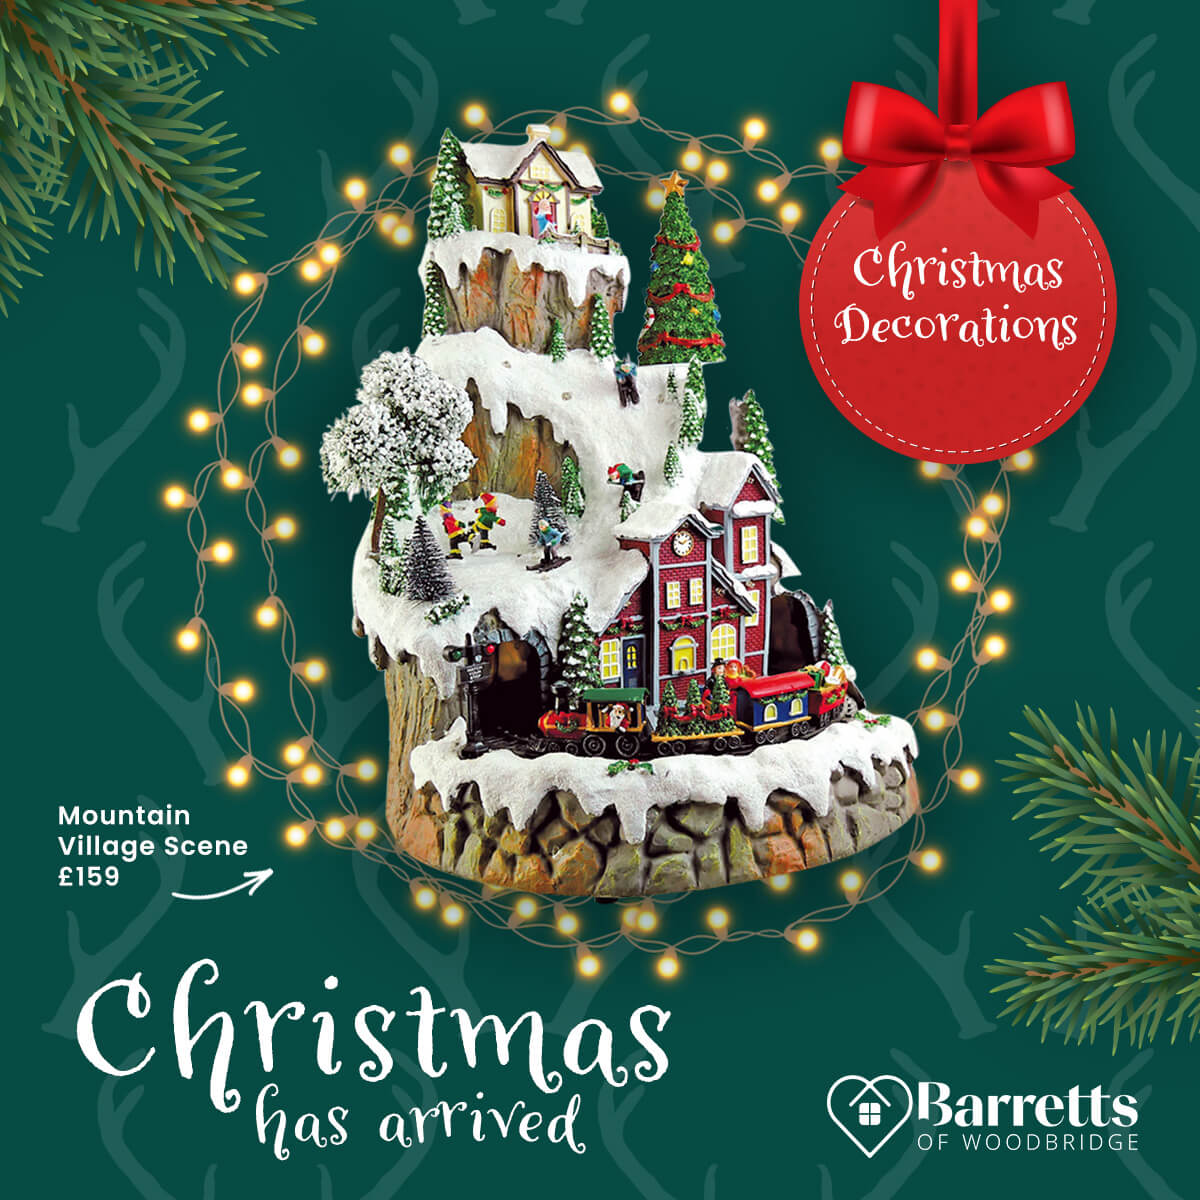 Christmas at Barretts